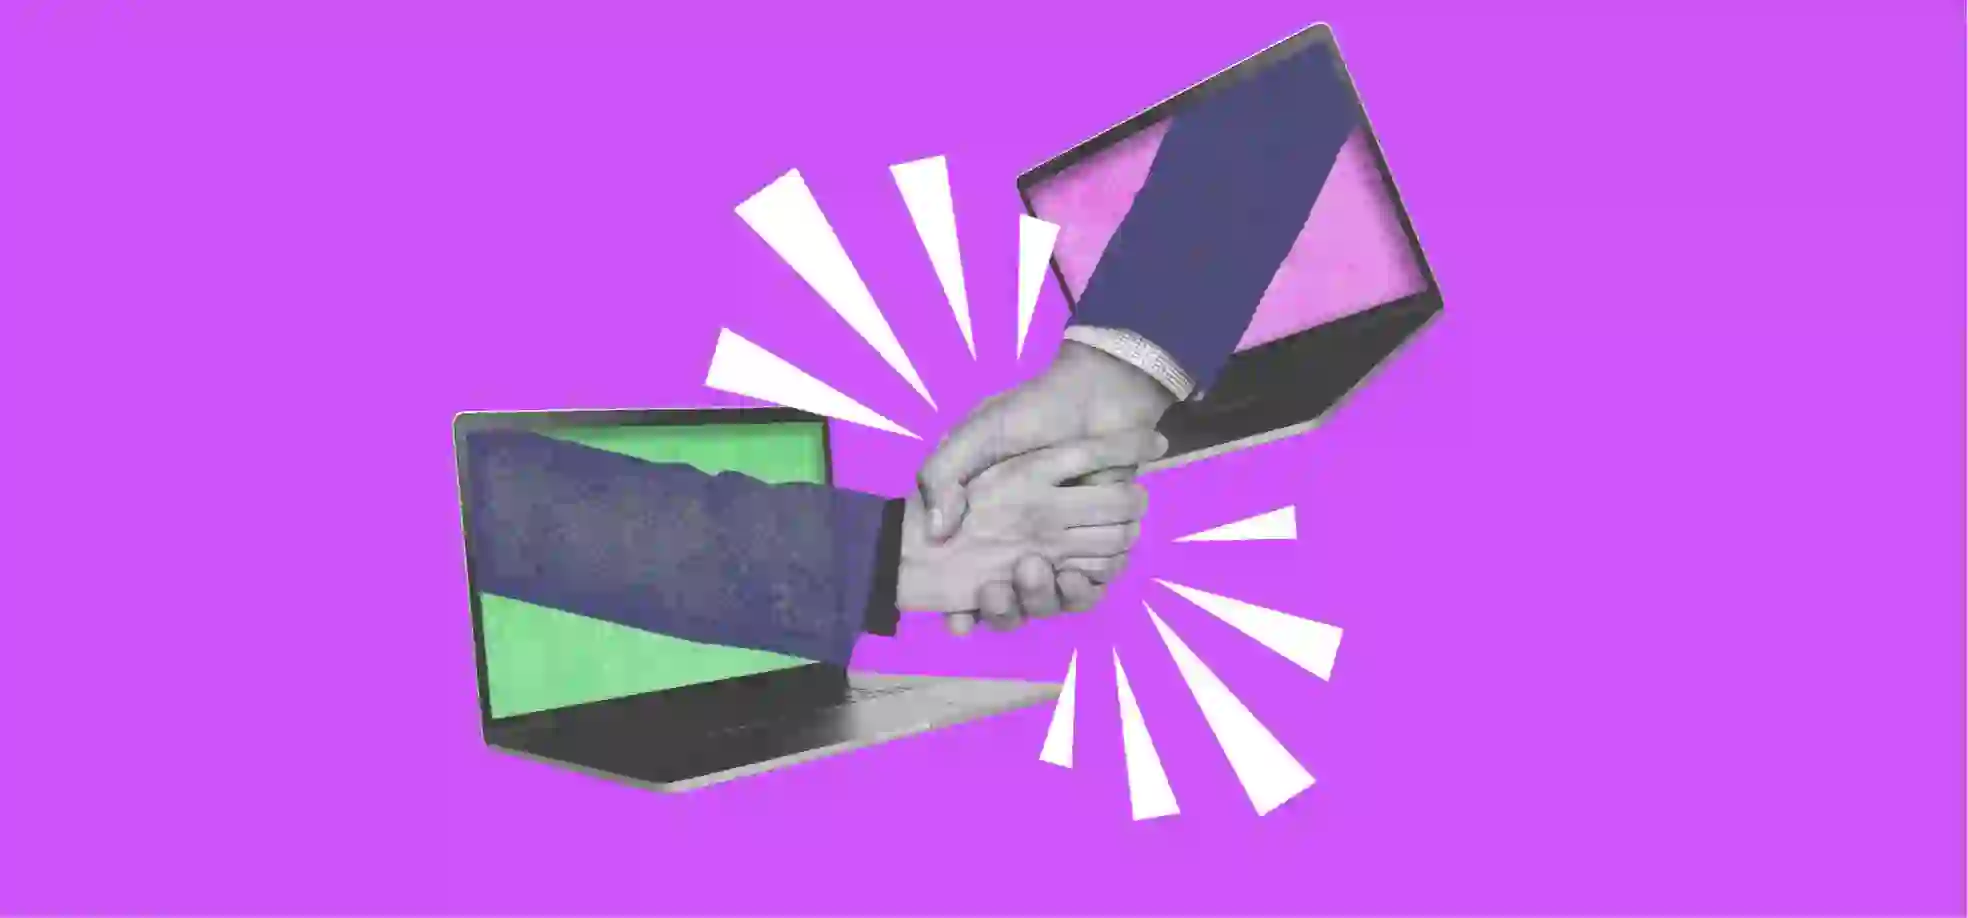 Handshake through laptops illustration